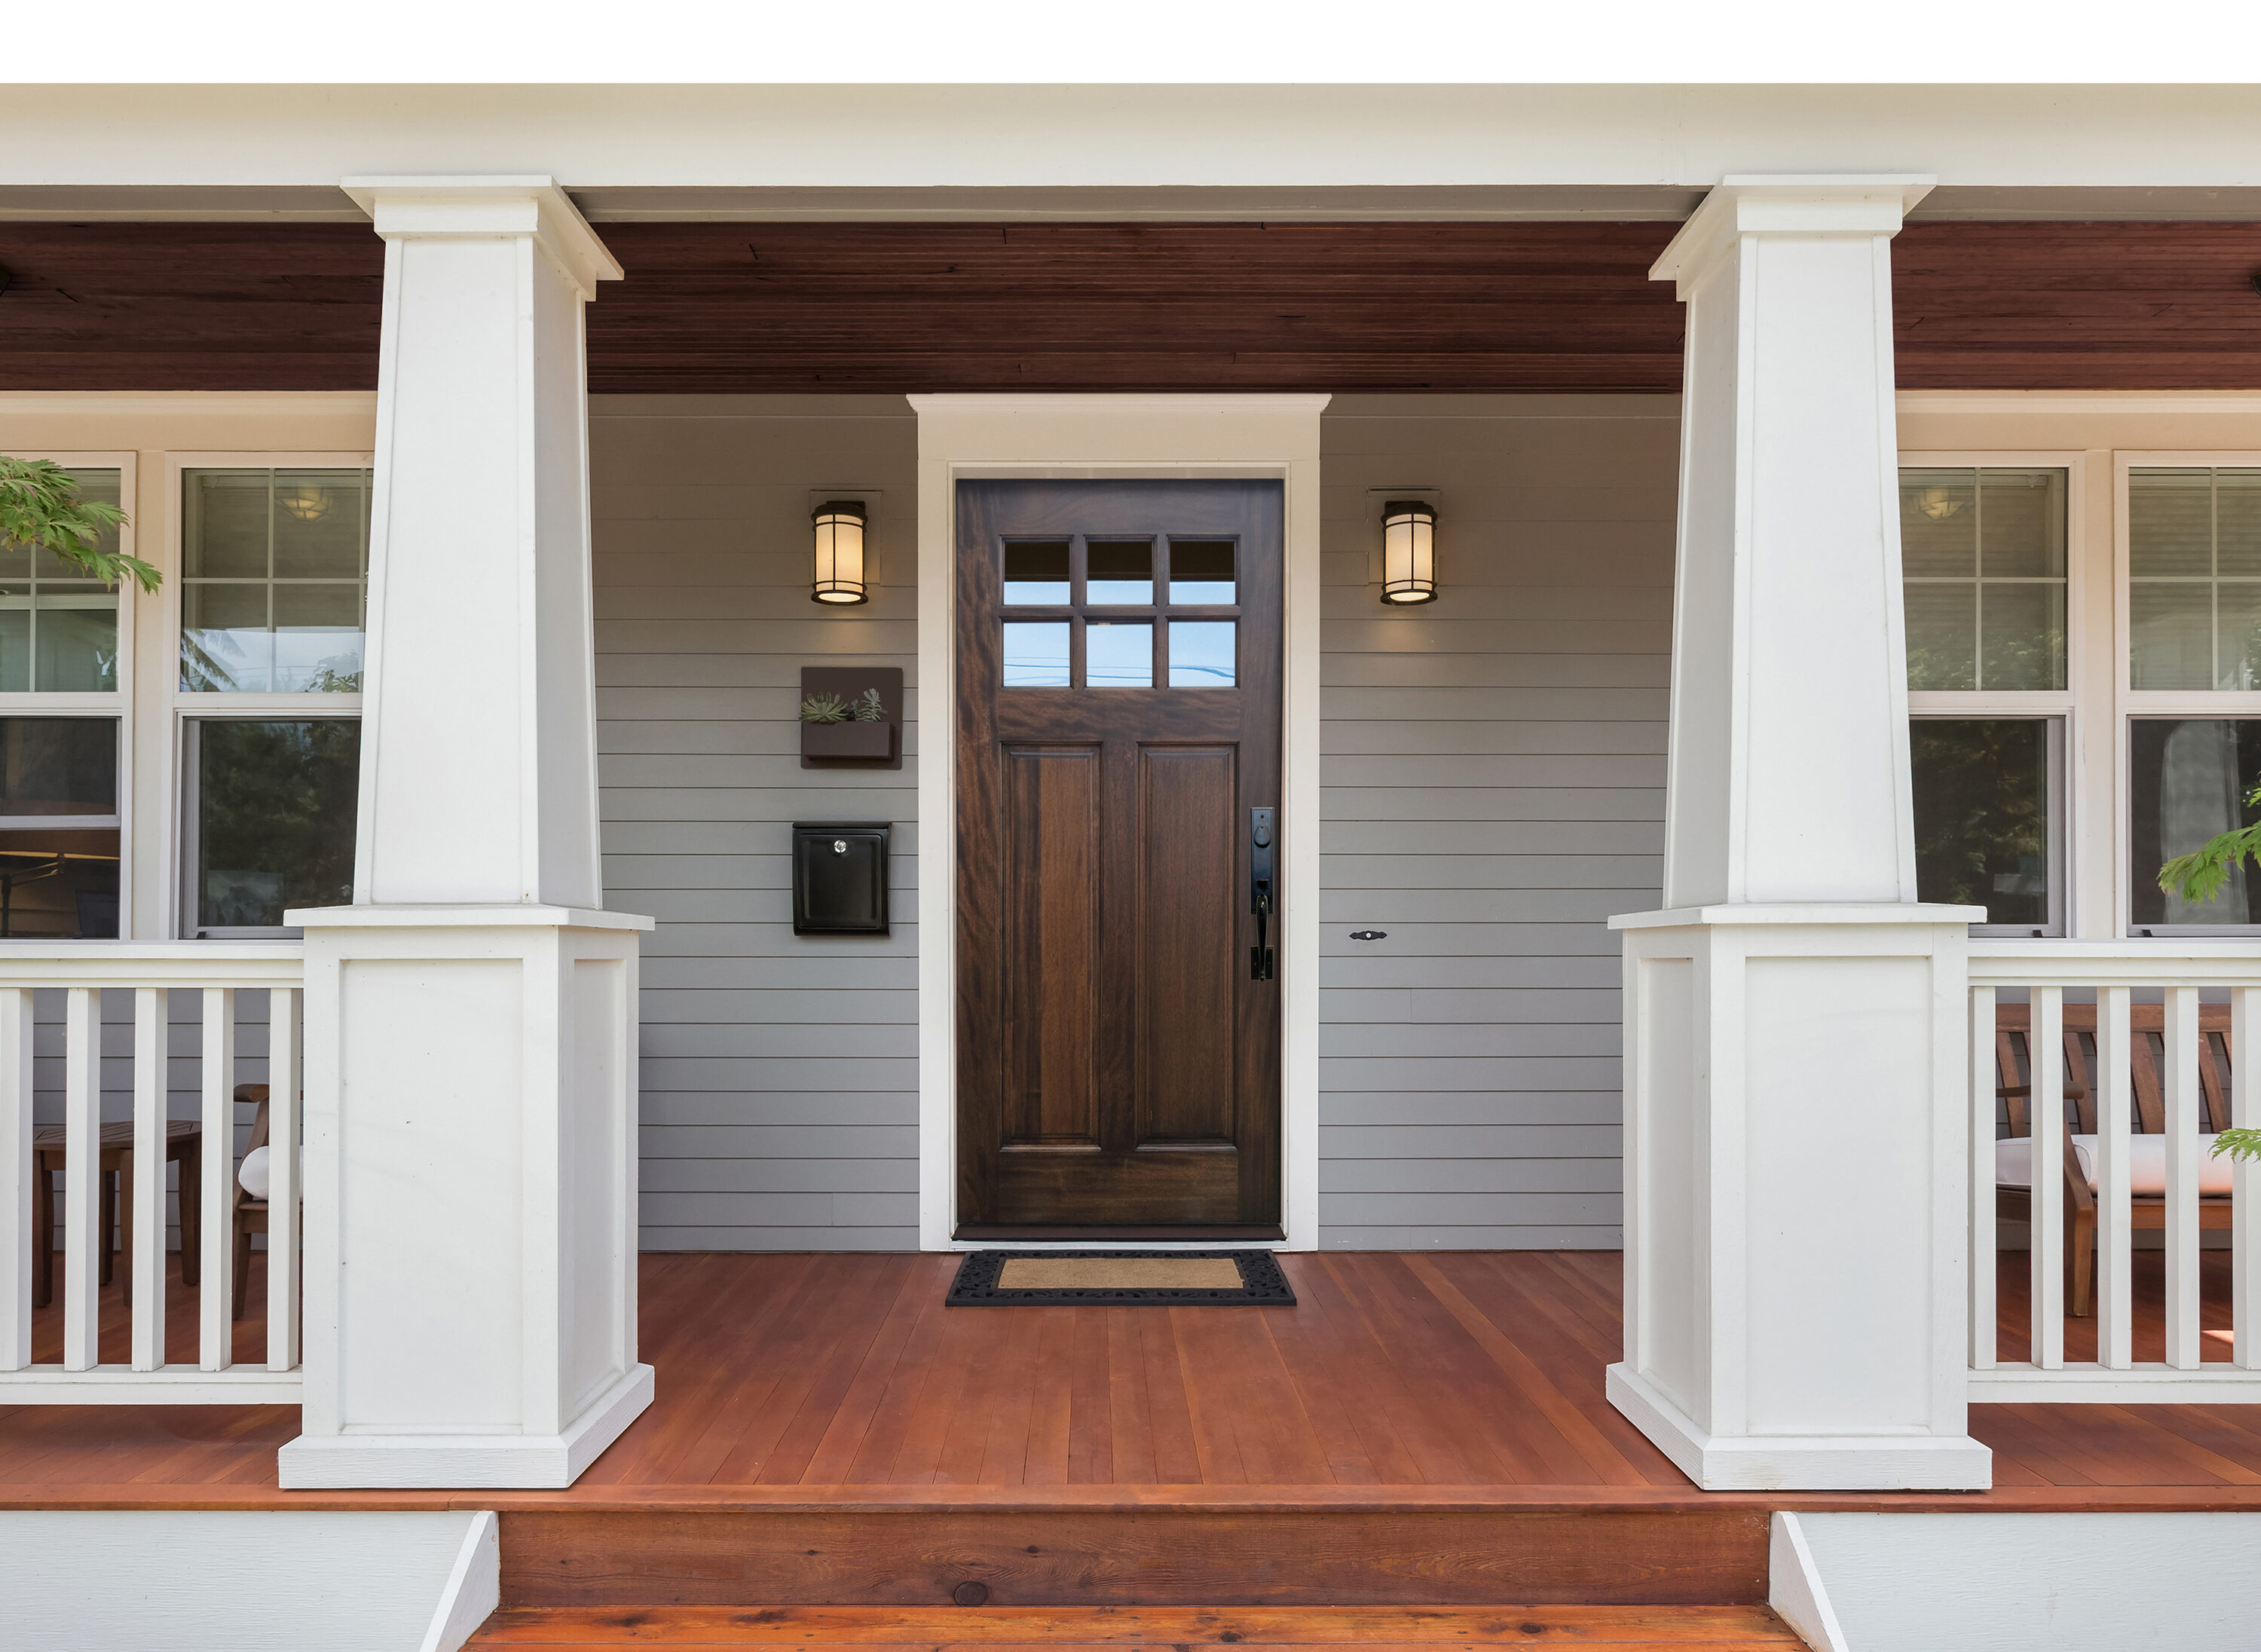 Creative Entryways 36-in x 80-in Wood Craftsman Left-Hand Inswing Golden  Oak Stained Prehung Single Front Door Solid Hardwood Core